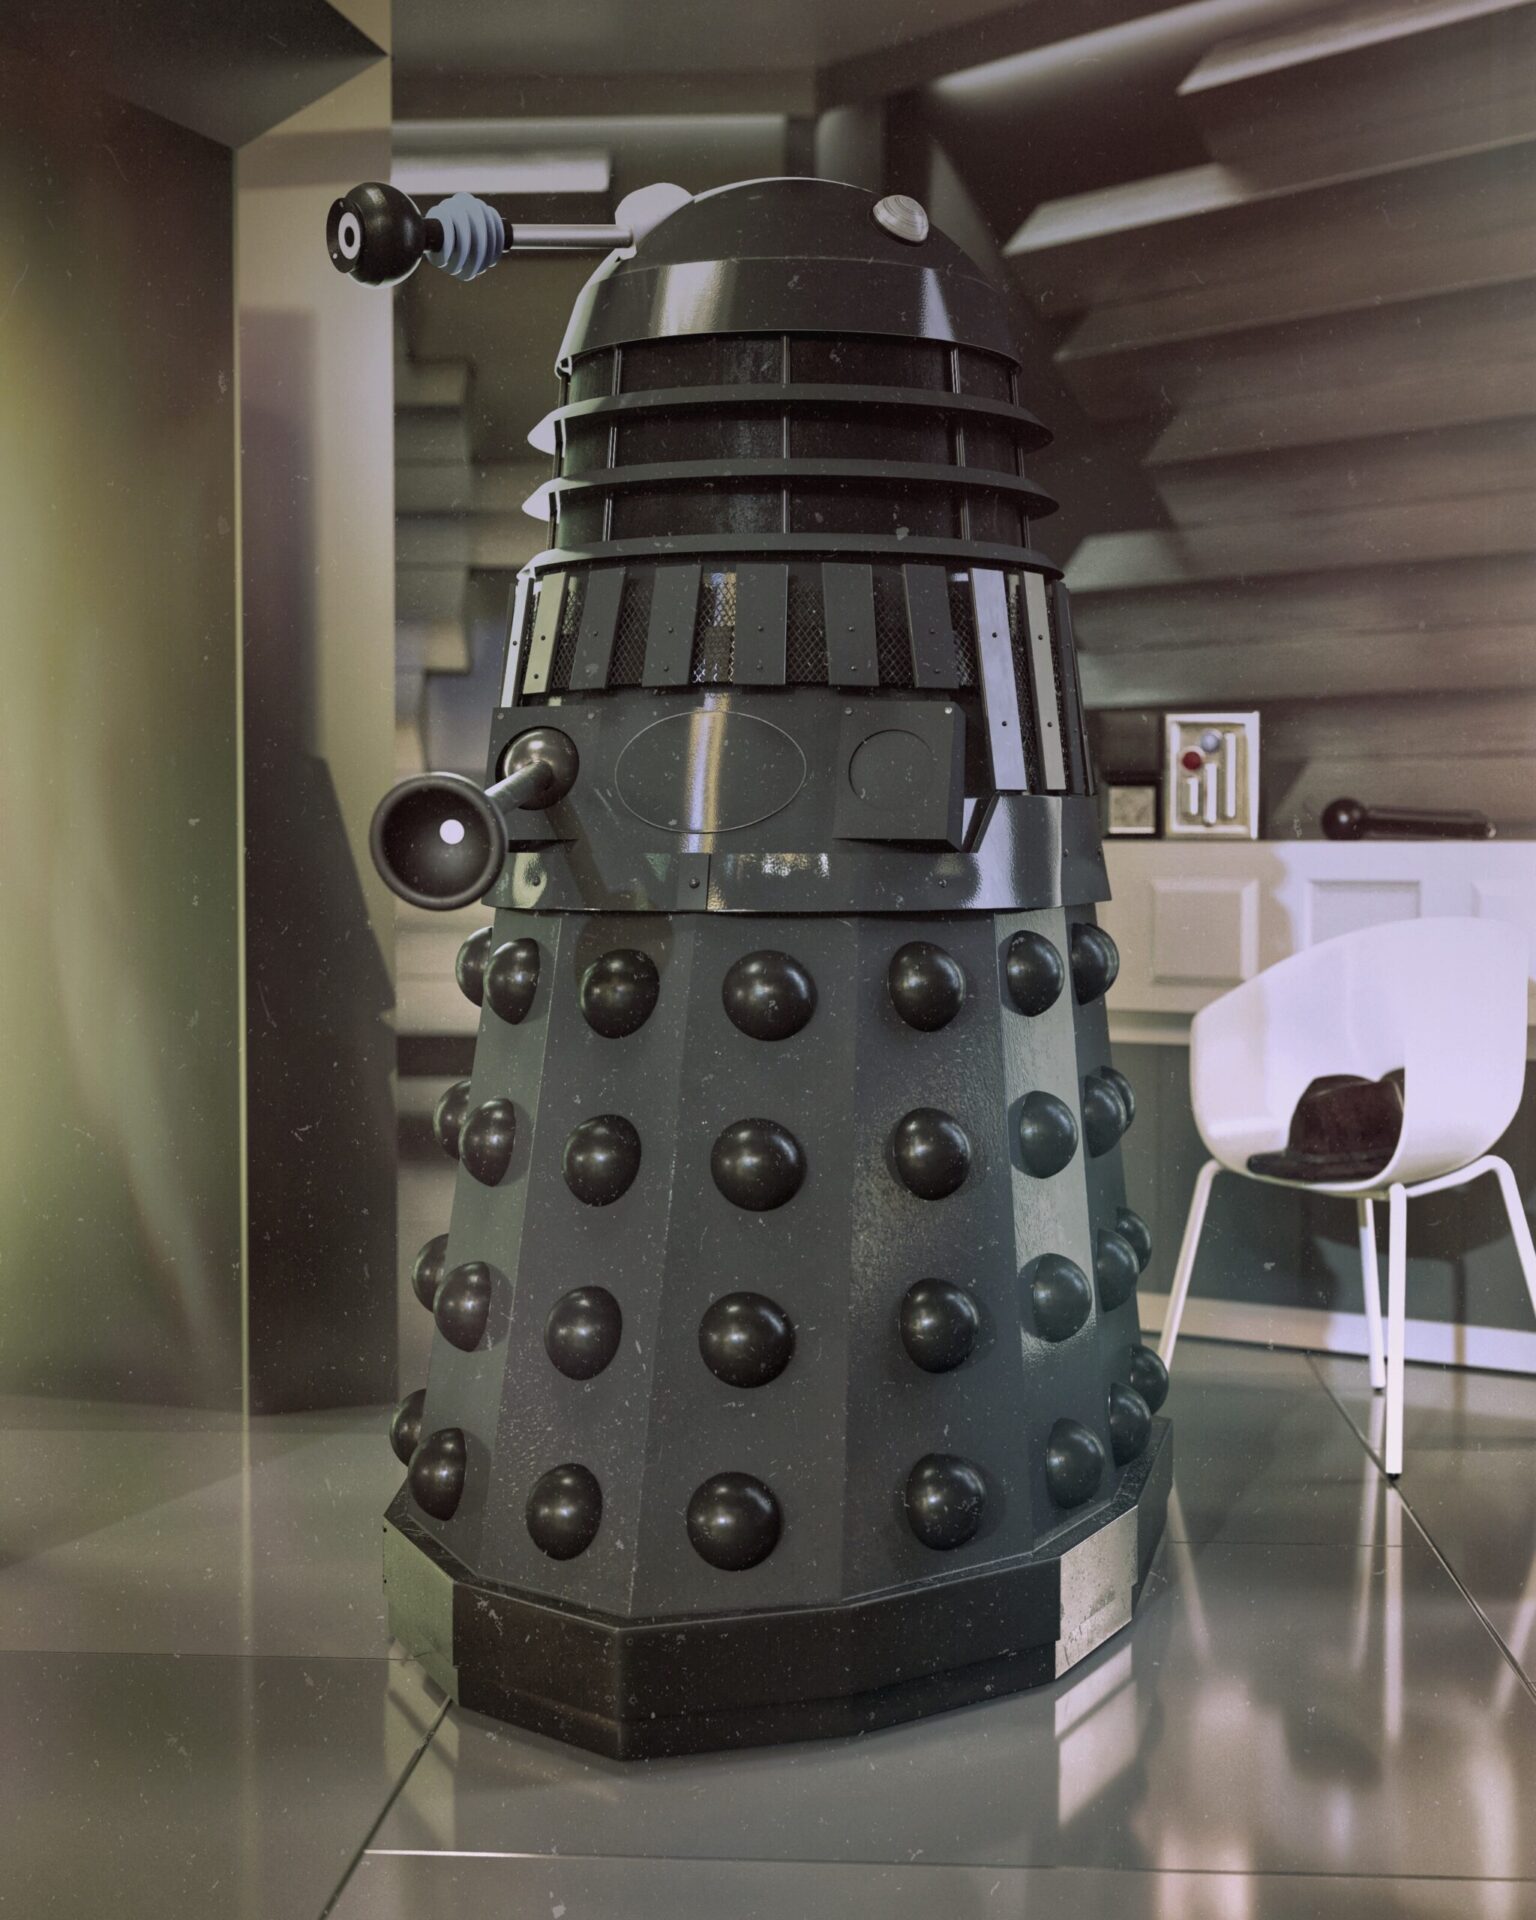 MK3 Genesis Dalek - The Daleks - By Phil Shaw